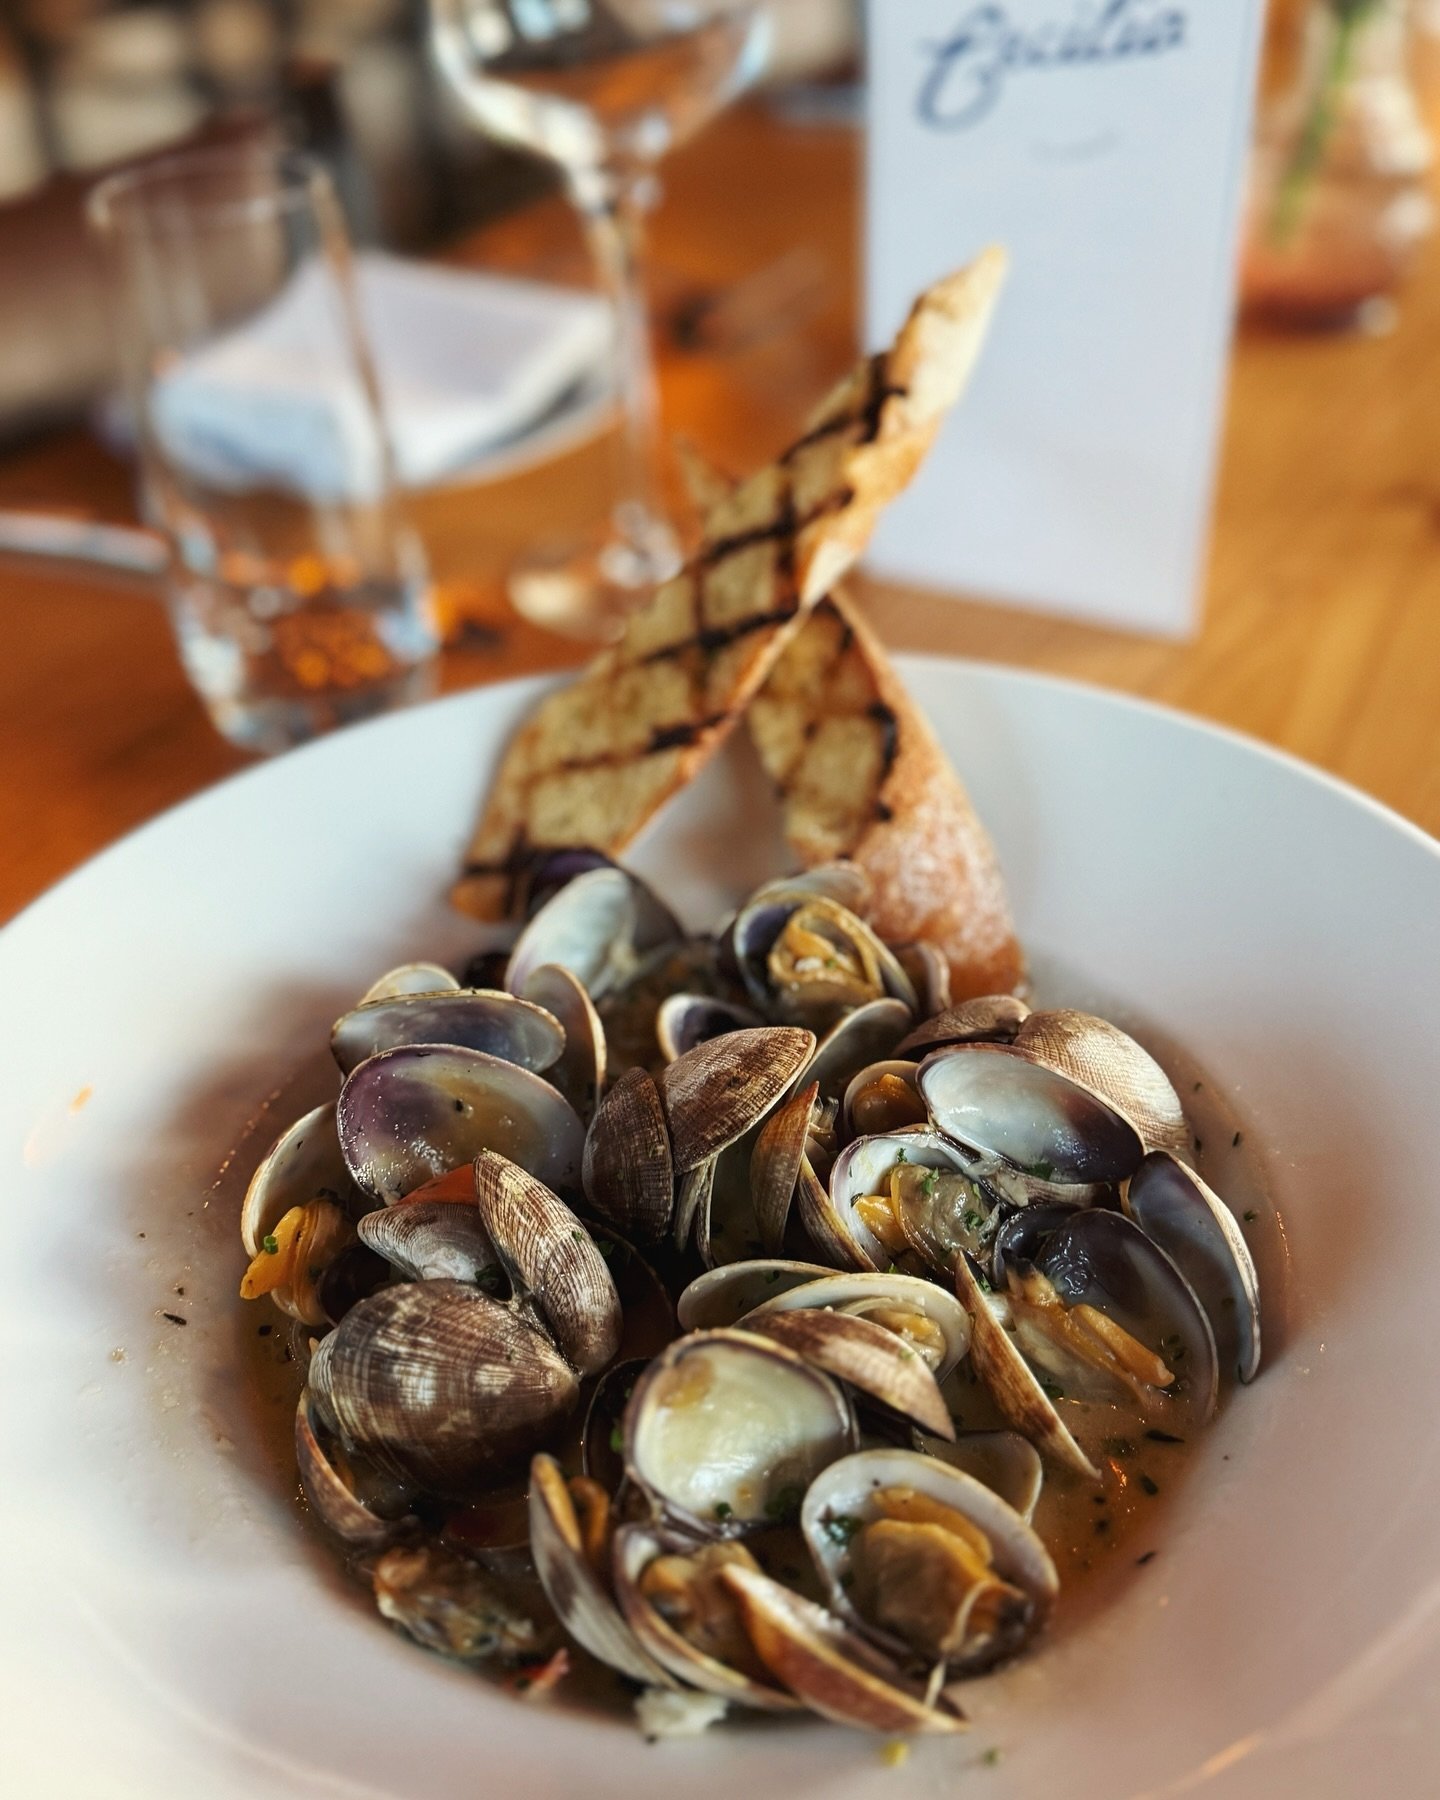 Manilla clams, starting tonight 🔥